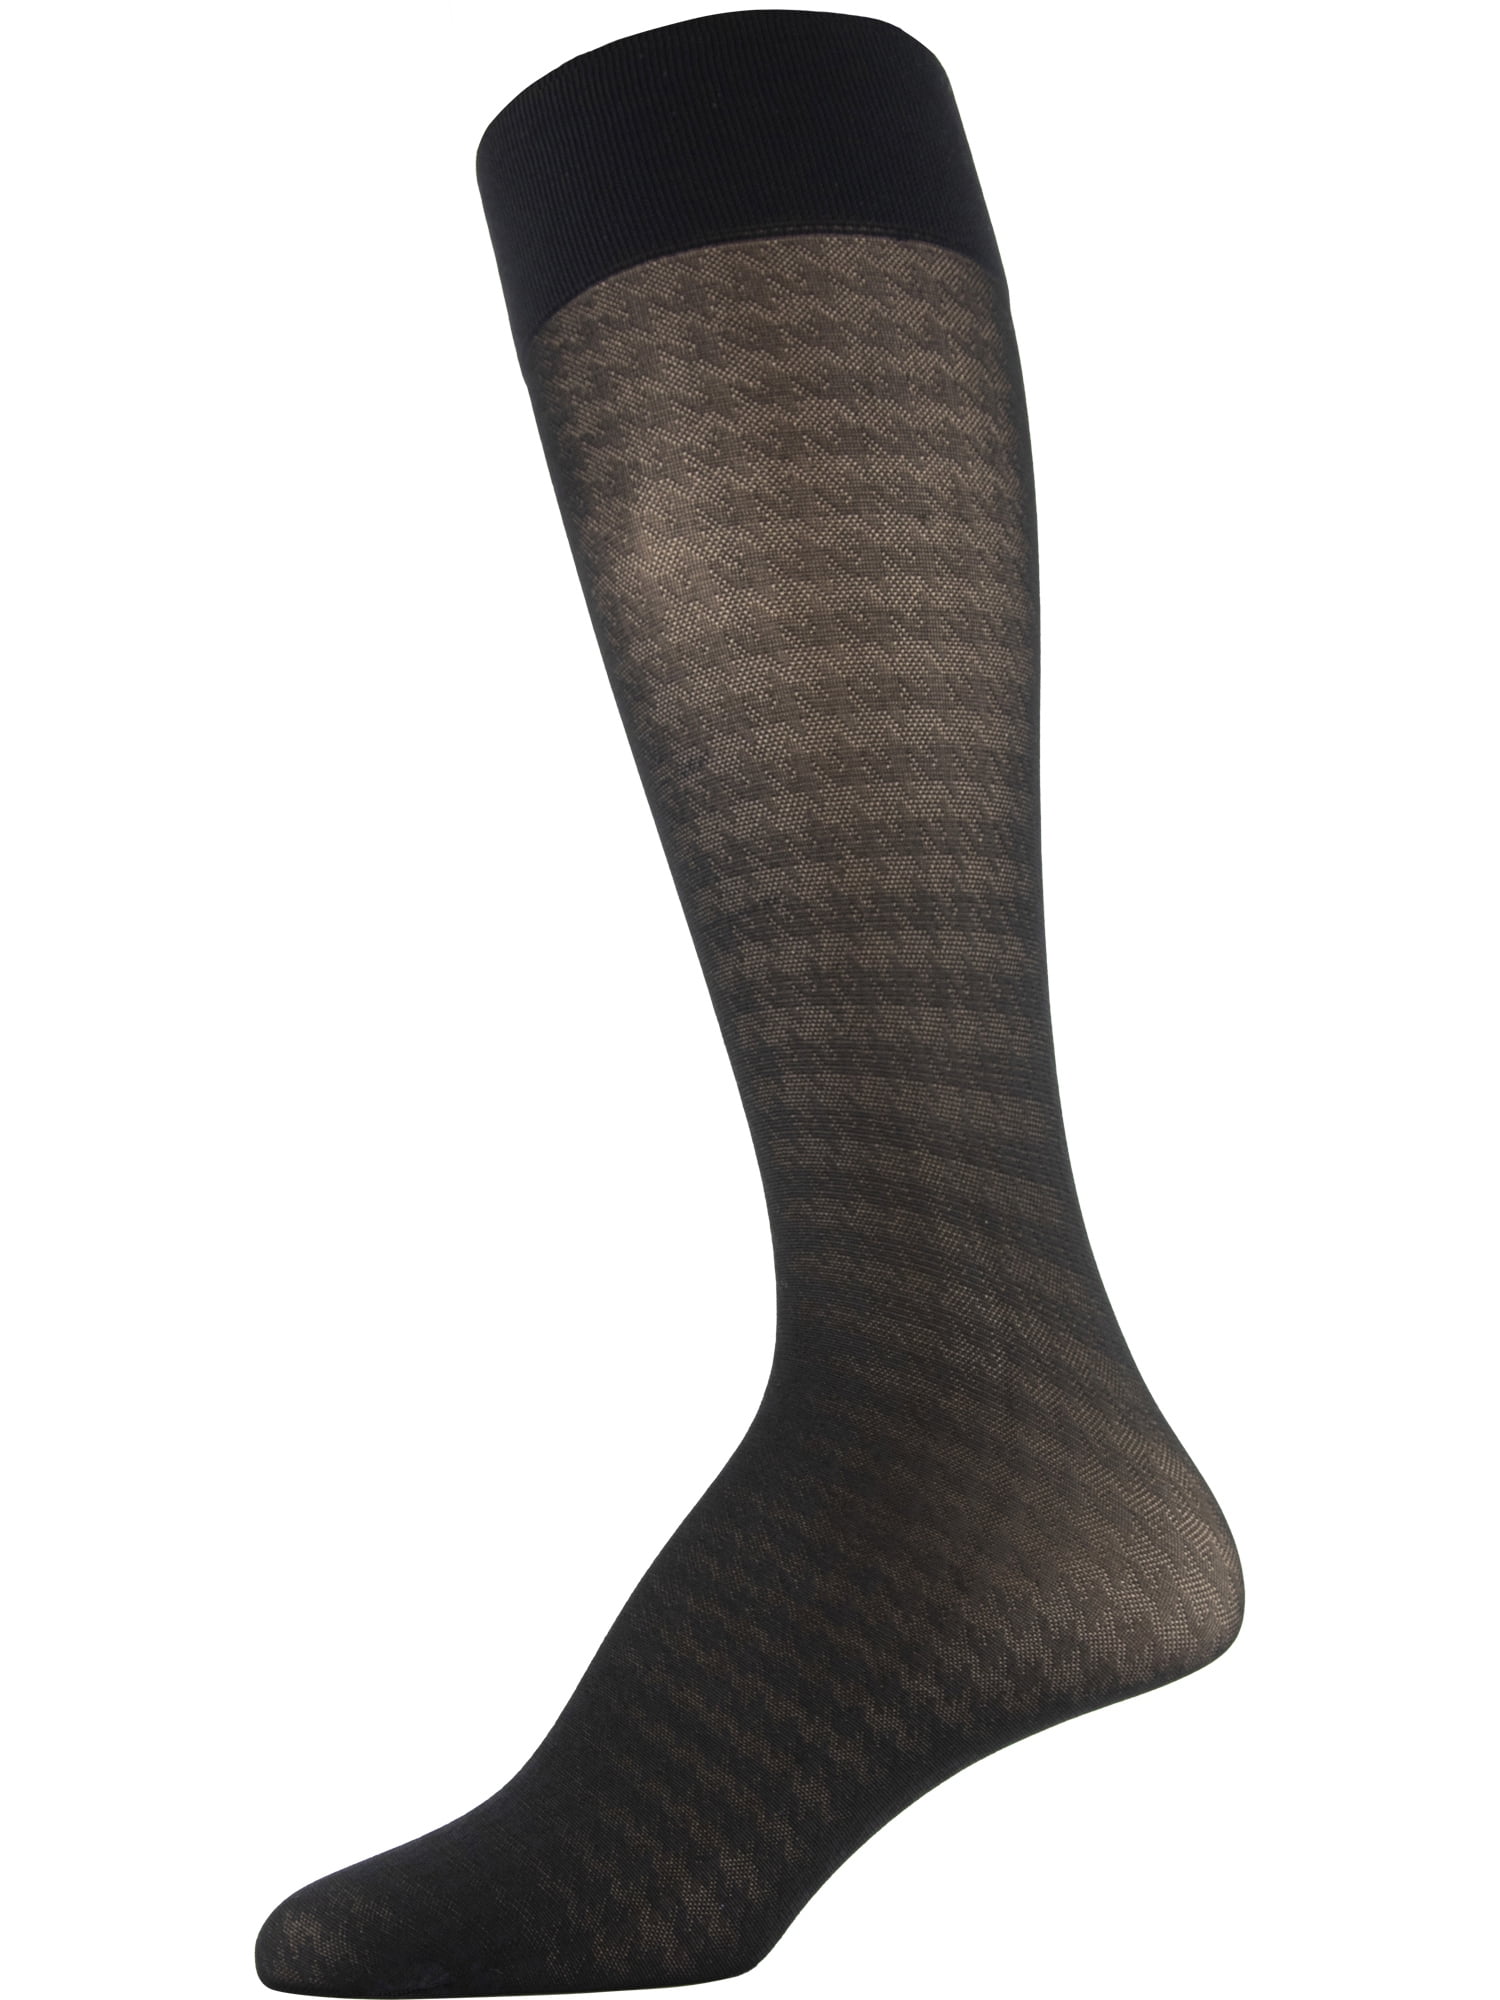 Women's Alpaca Trouser Socks Multi Pack - Thin 4-Season Socks for Her |  Warrior Alpaca Socks